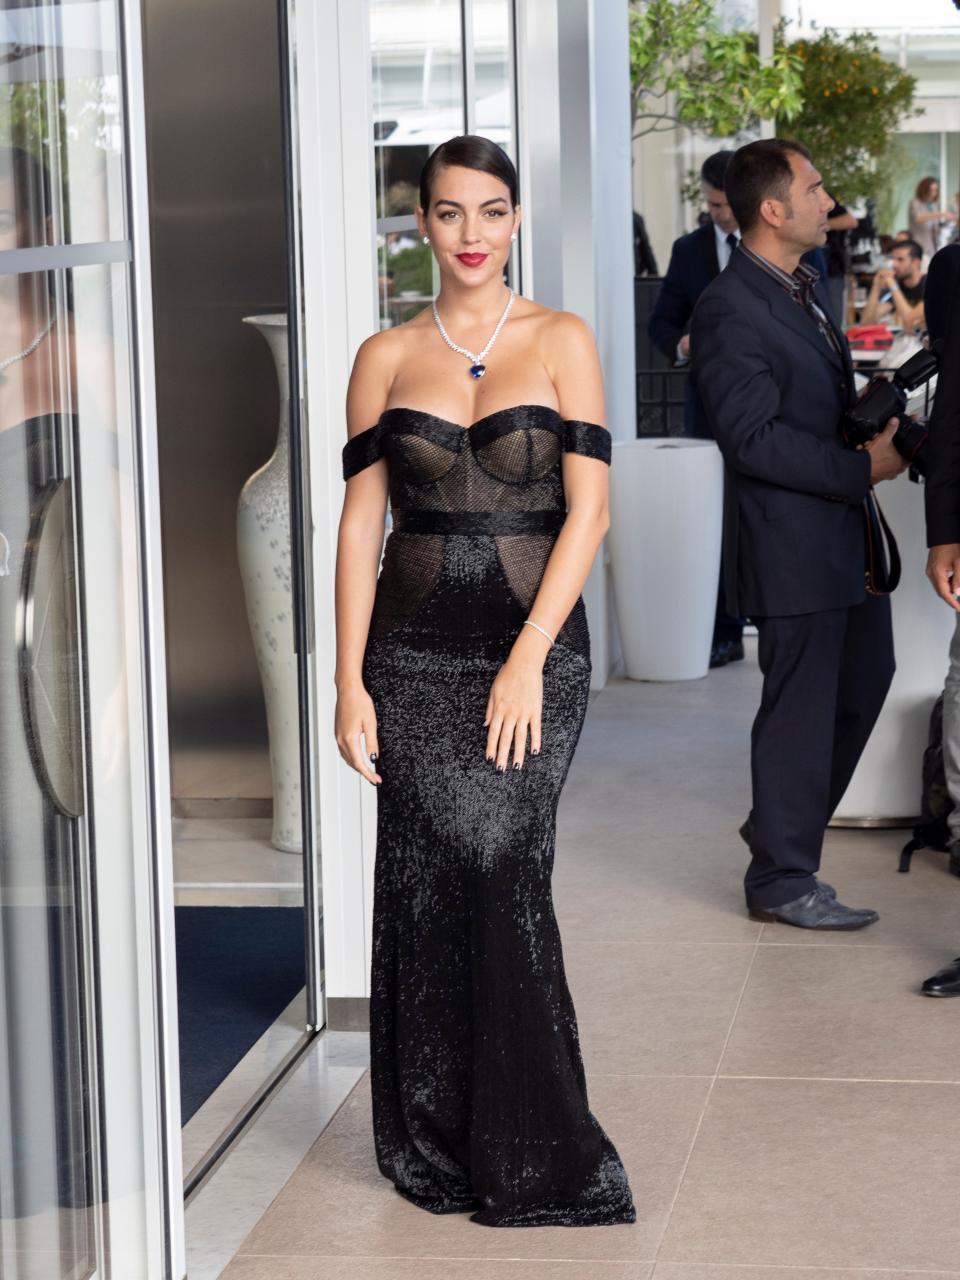 Georgina Rodriguez at the 2019 Cannes Film Festival.